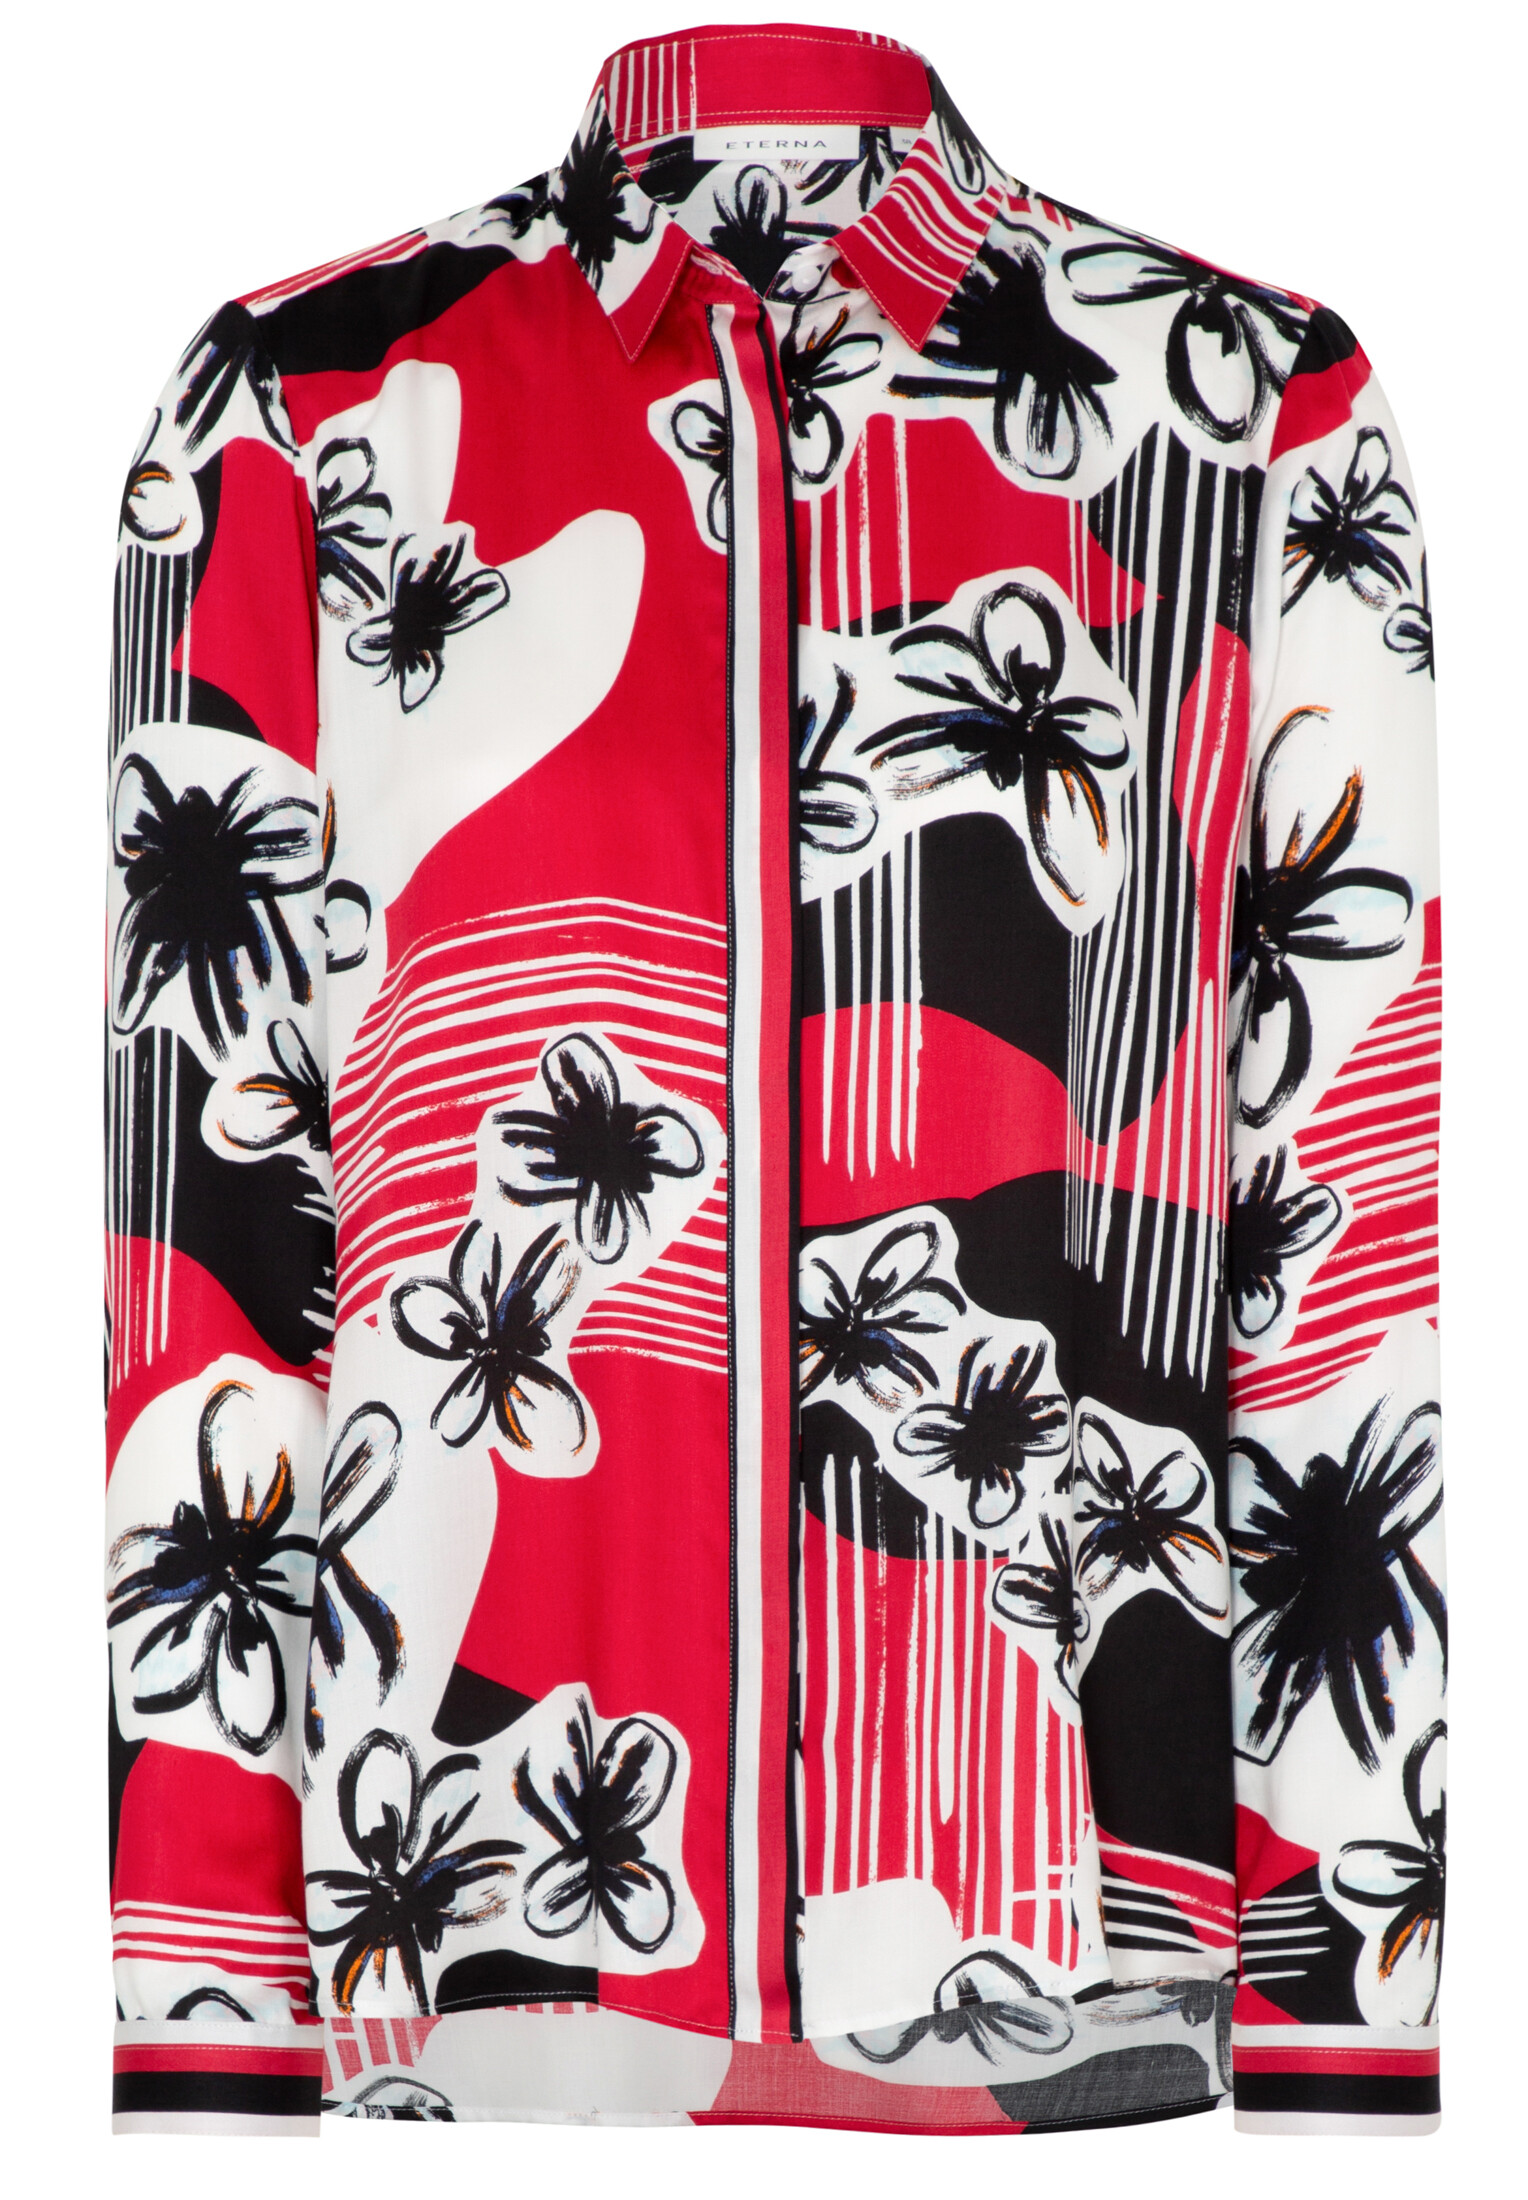 ETERNA LOOSE FIT Langarm Bluse rot weiß schwarz floral 7424-54-D932 | Loose  Fit | Eterna | Blusen | Damen Bekleidung | Jeans-Manufaktur